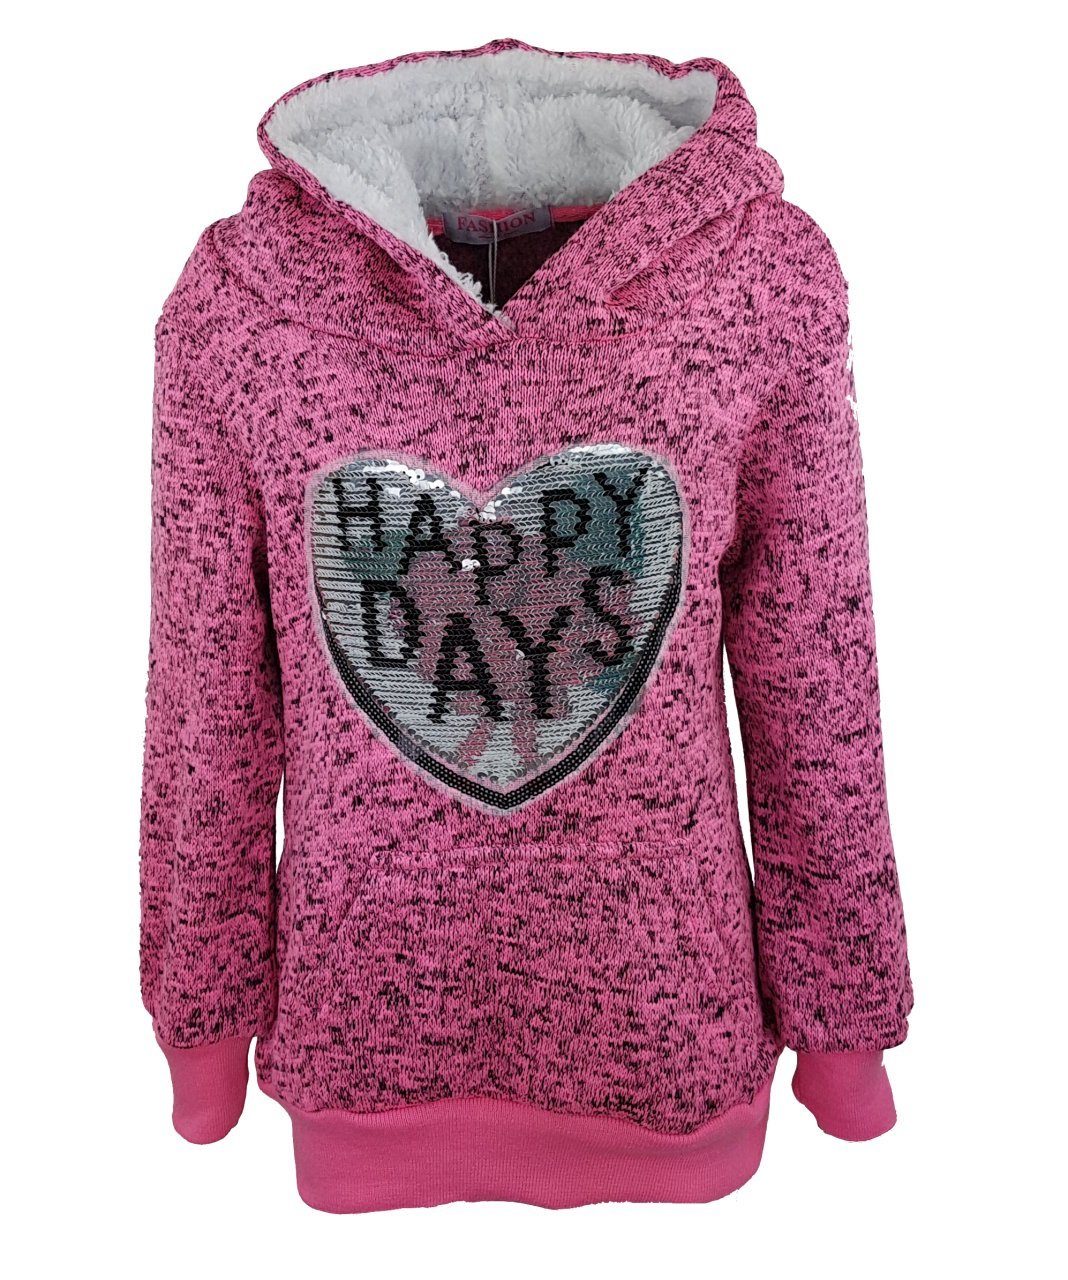 Girls Fashion Kapuzenpullover Sweatshirt, MS06 Pullover, Pink Pailletten, Kapuzen